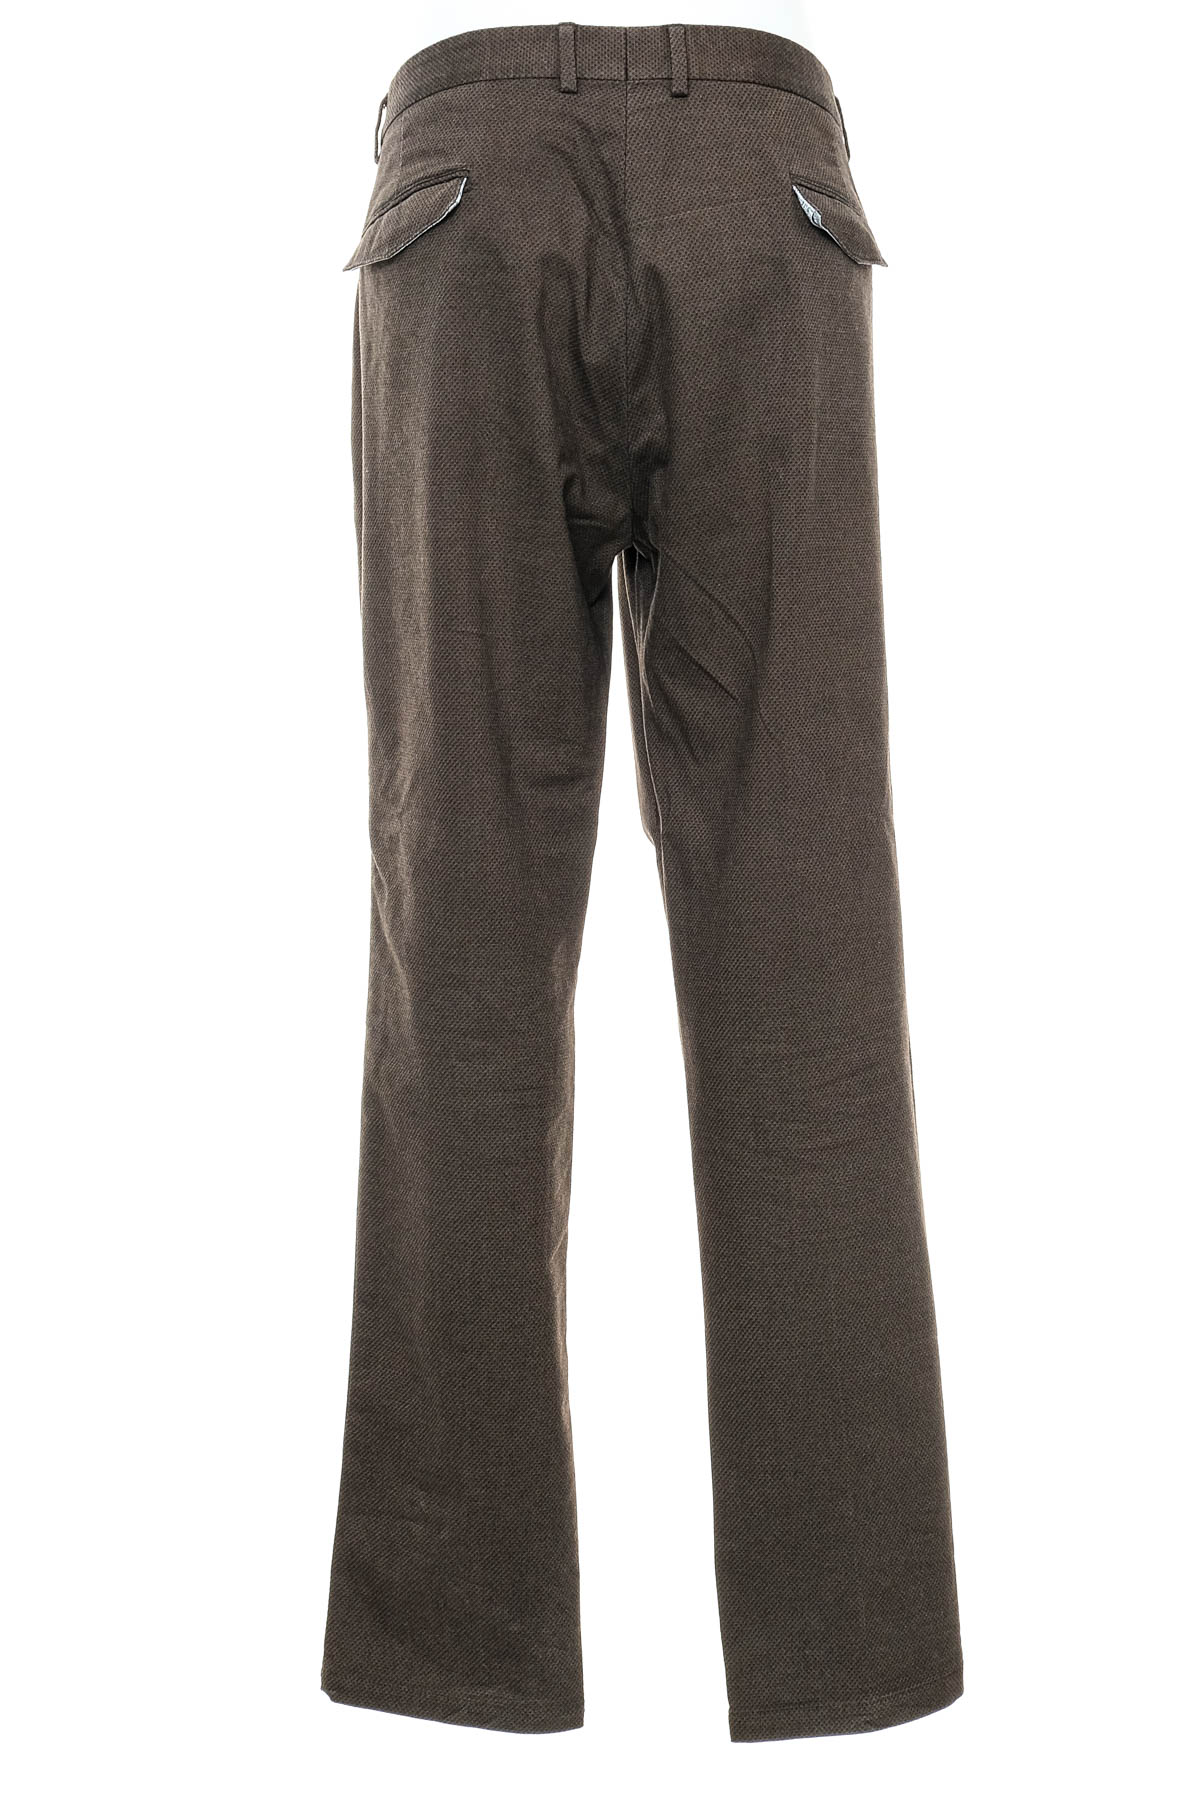 Pantalon pentru bărbați - ANDREWS - 1